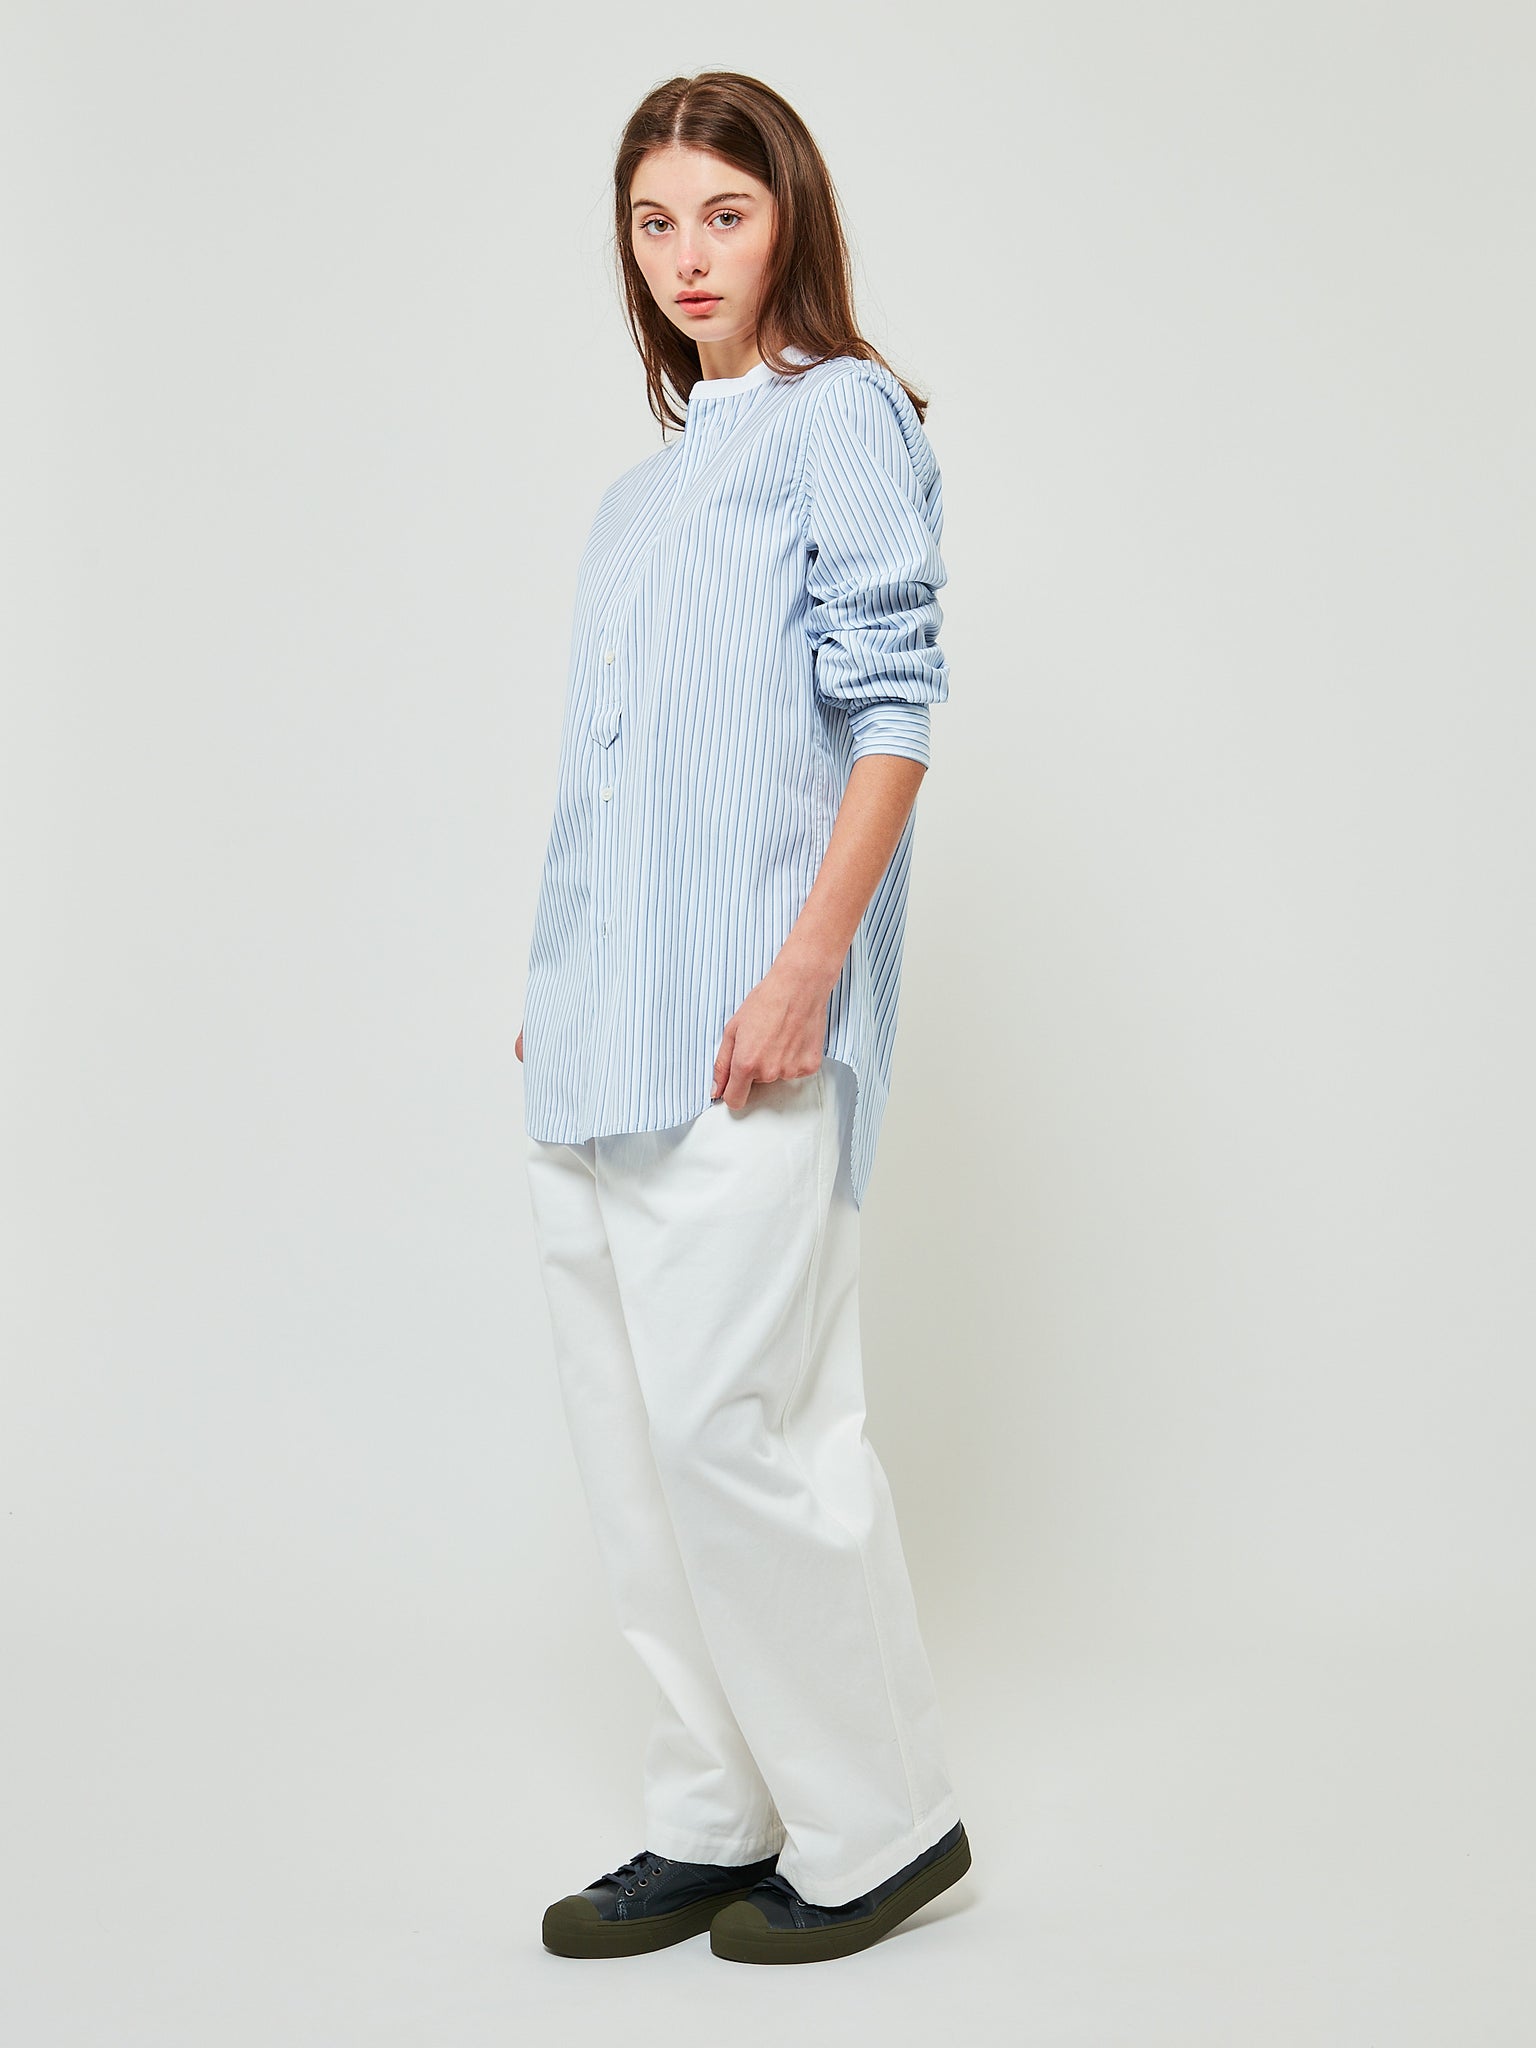 Boyd Shirt Blue Stripe White